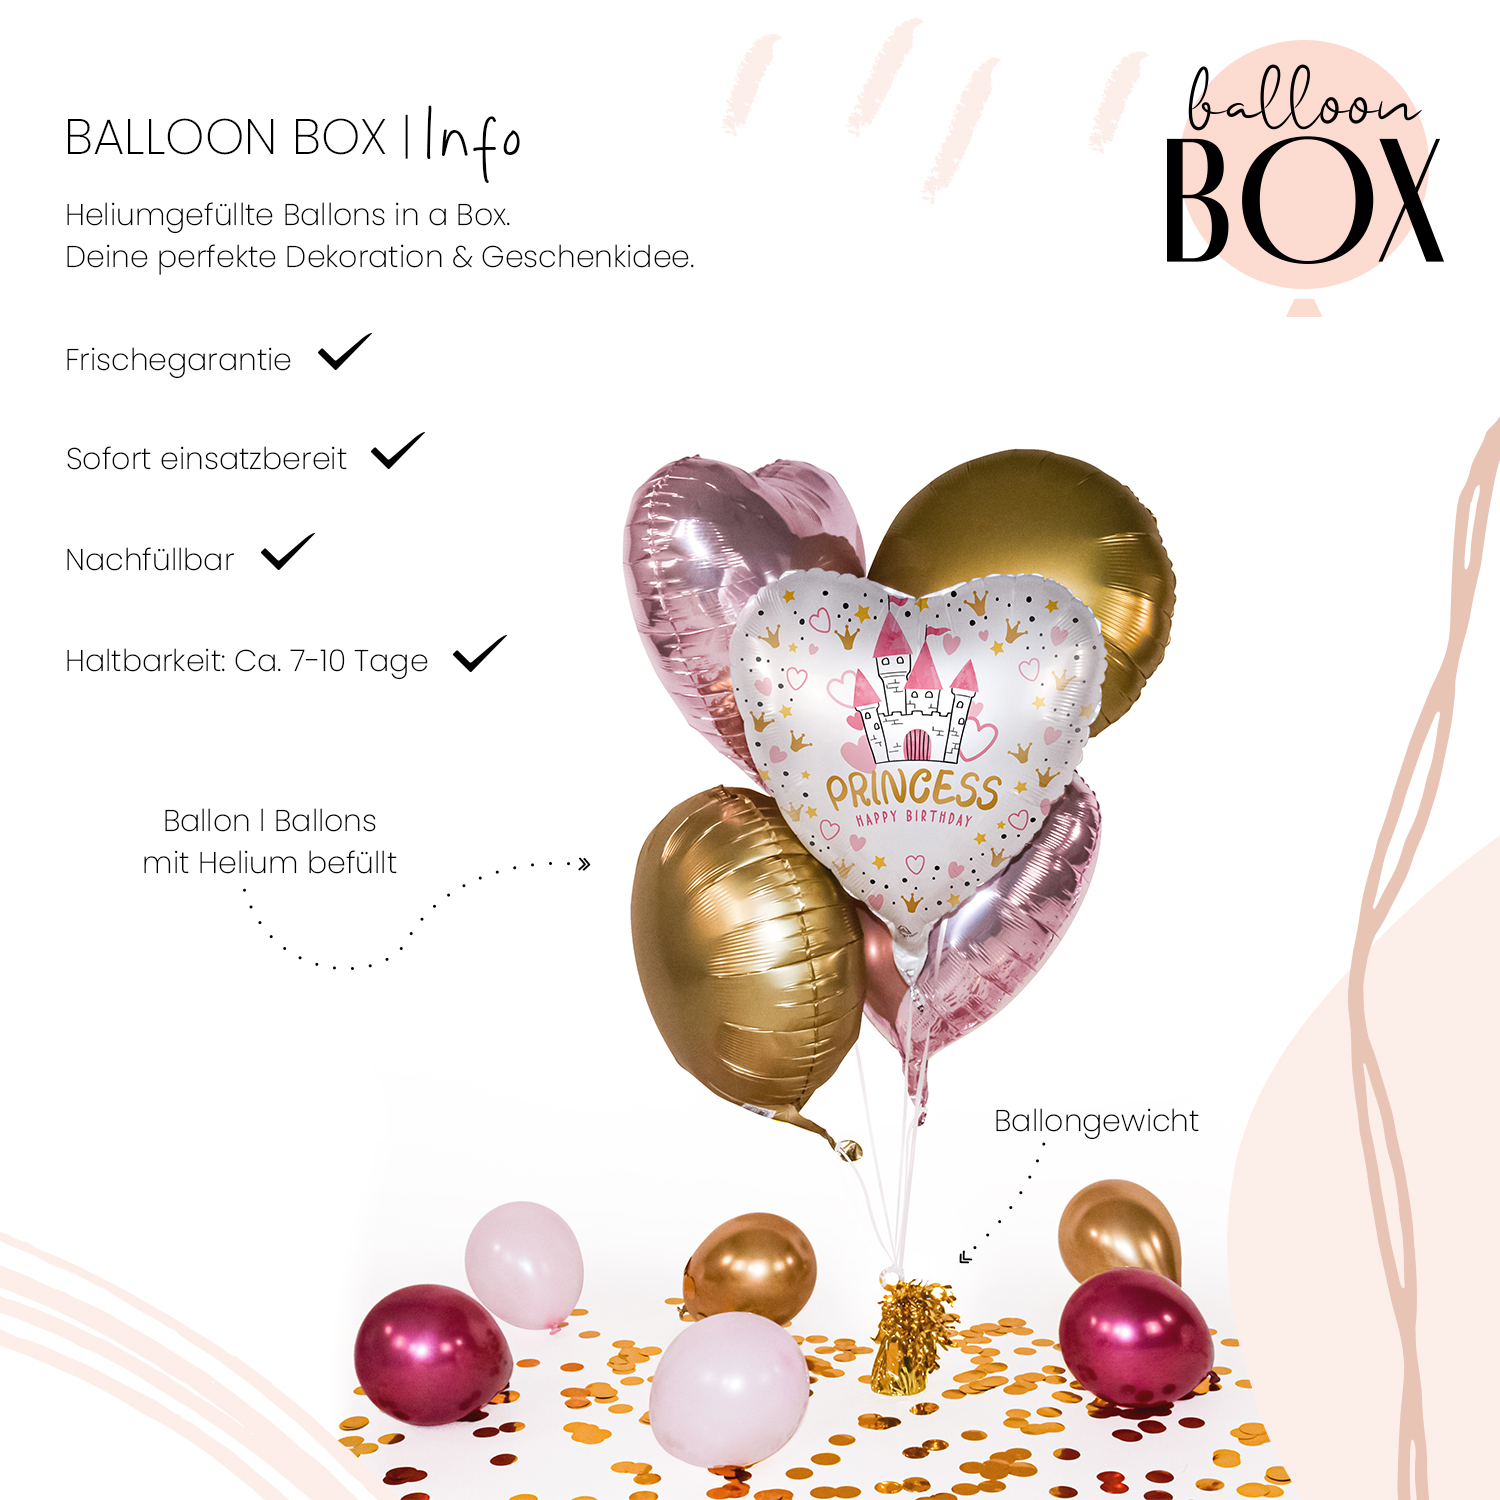 Heliumballon in a Box - Magical Princess Birthday